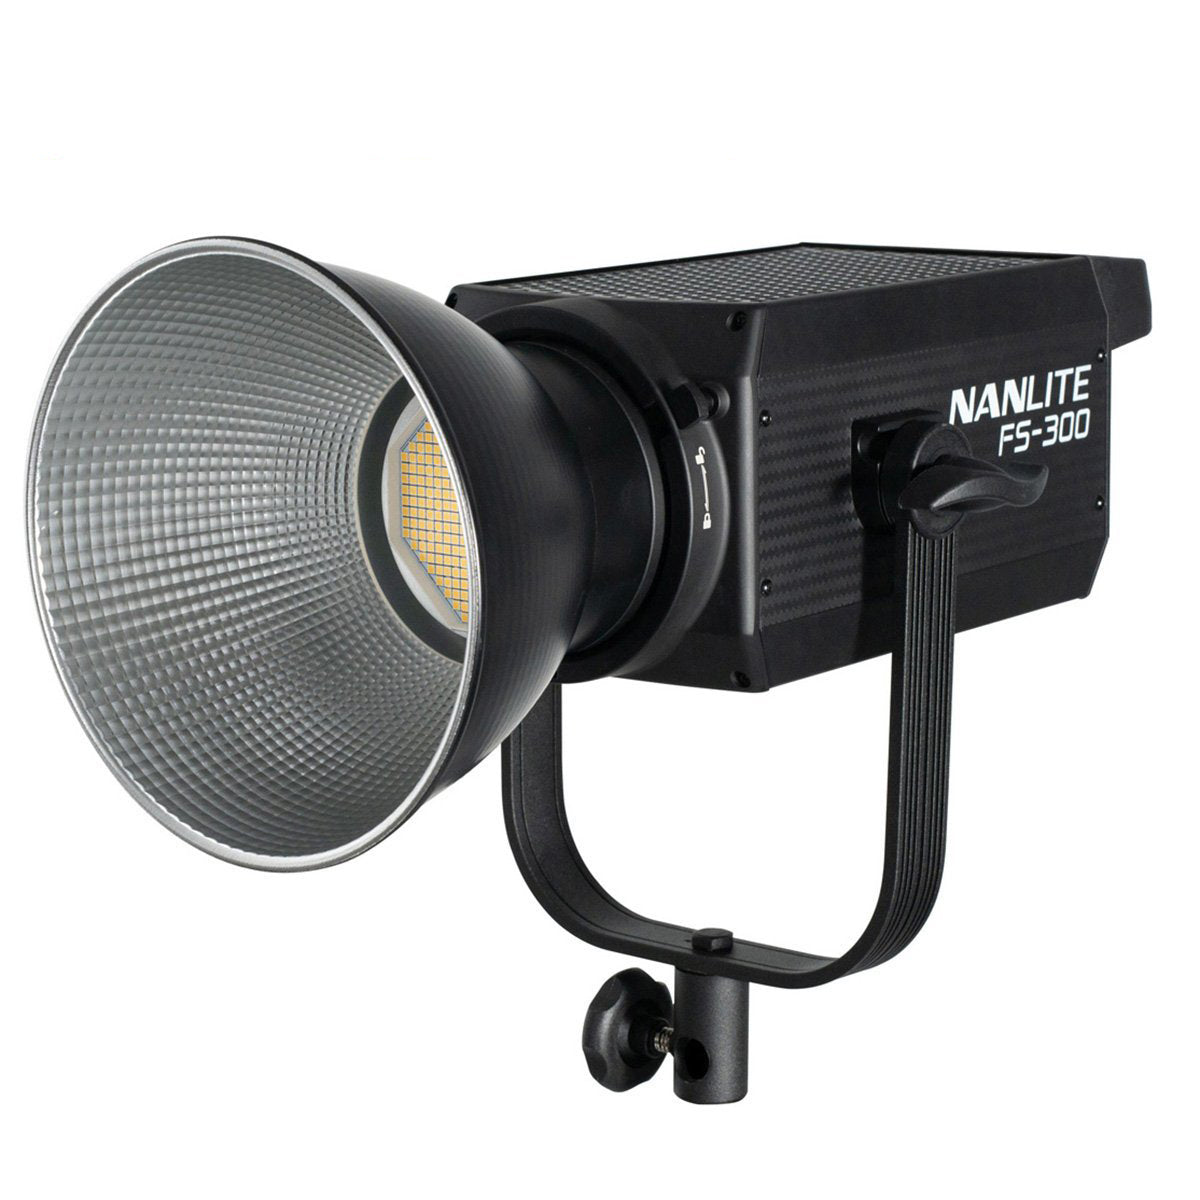 NANLITE FS-300 ナンライト 撮影用ライト スタジオライト LEDライト 